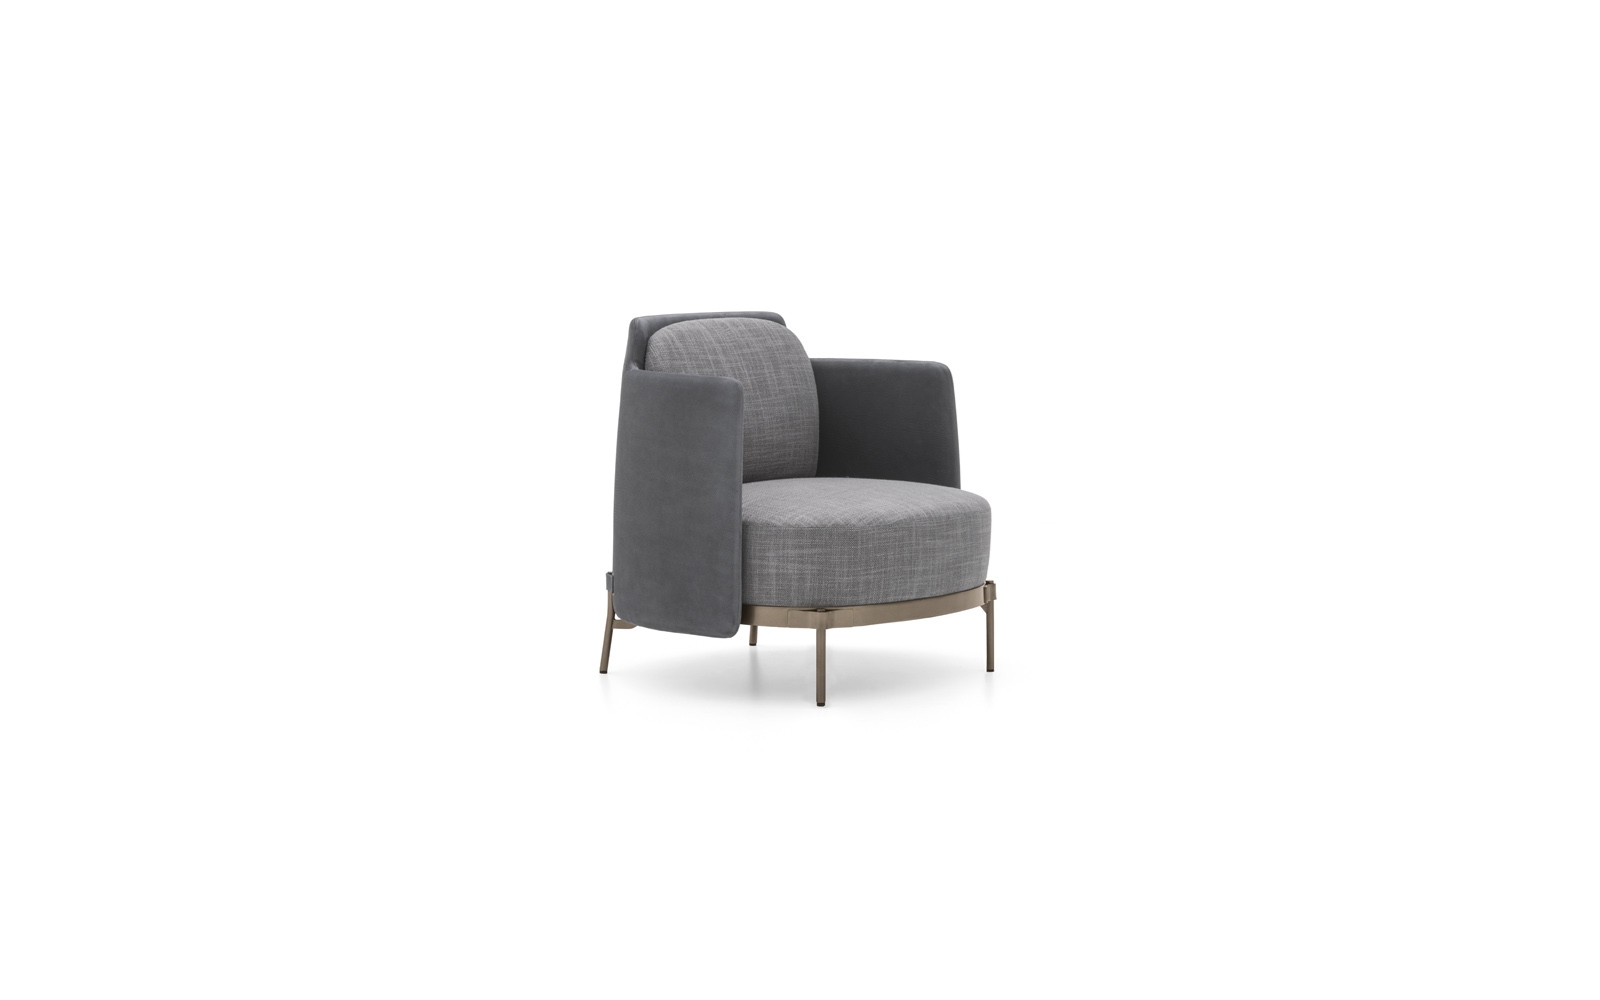 EKar Italian Style Mordern Design Leisure Chair